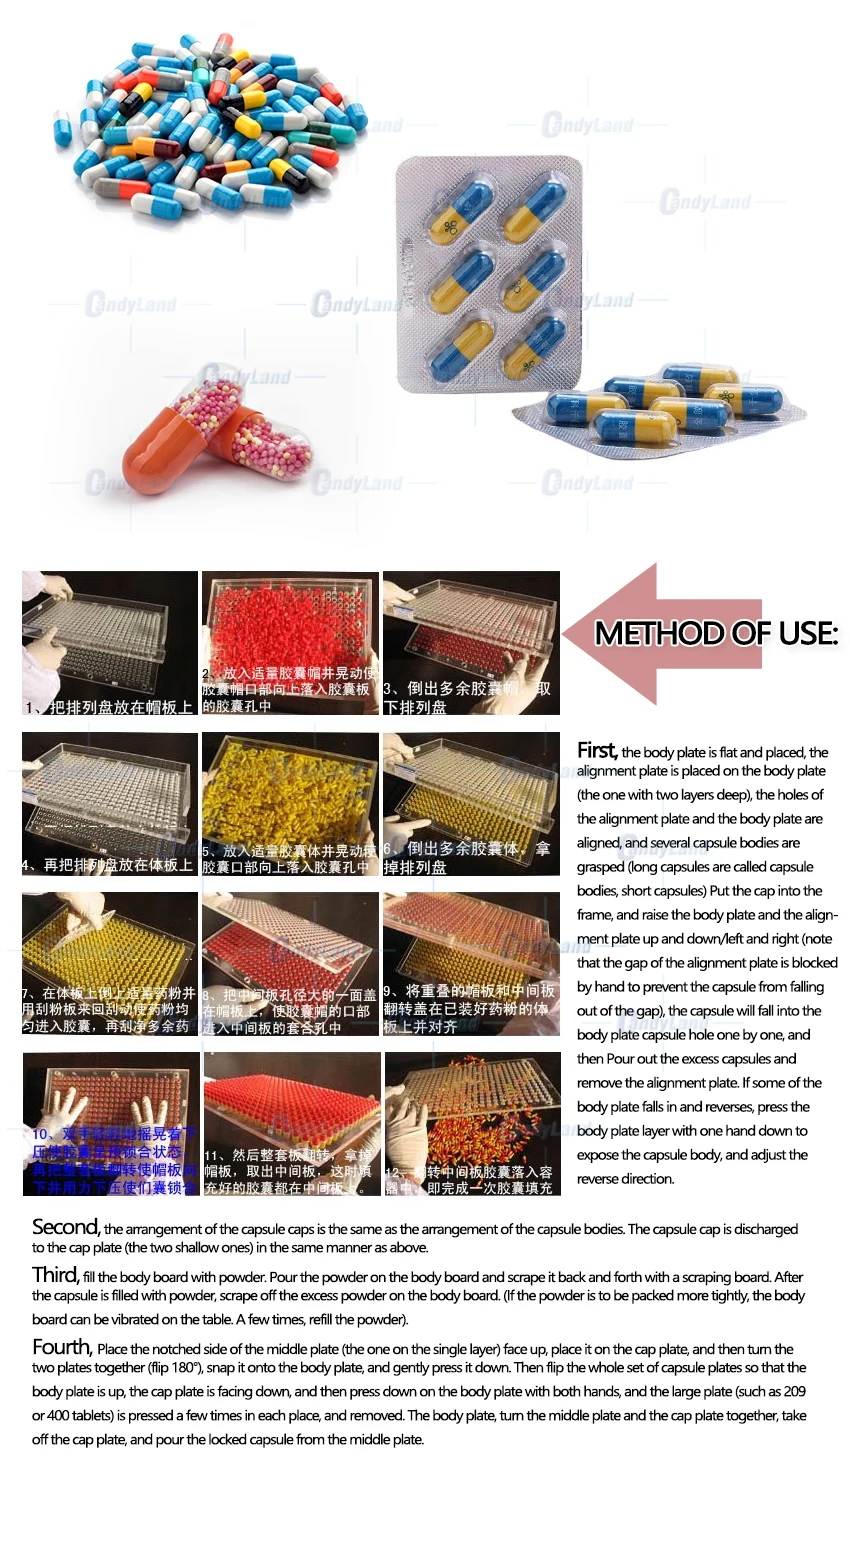 Candyland 400 Holes Manual Capsule Filling Machine#00#0#1#2 Pharmaceutical Capsules Maker for DIY medicine Herbal pill powde